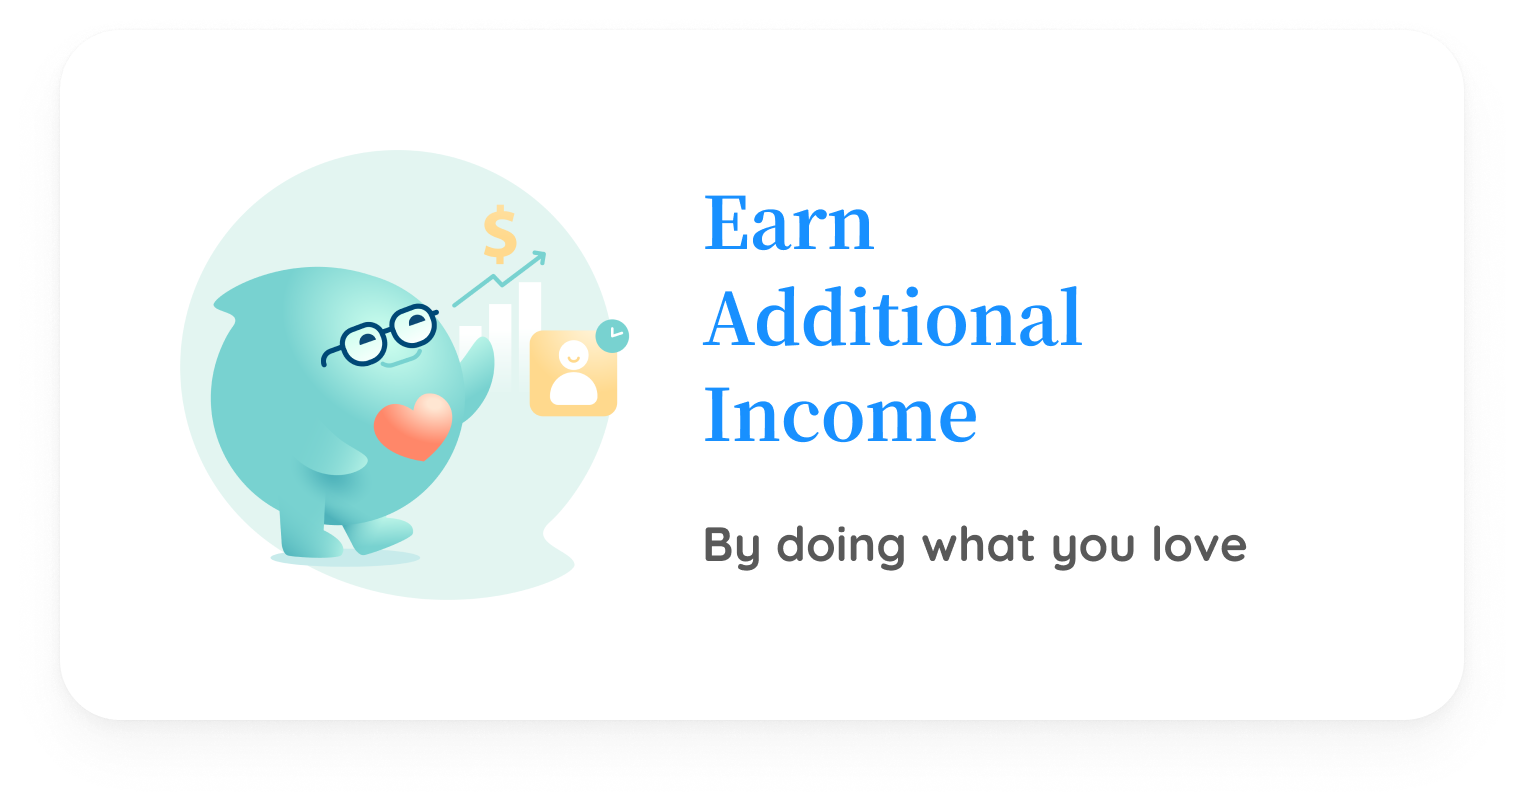 Earn Additional Income